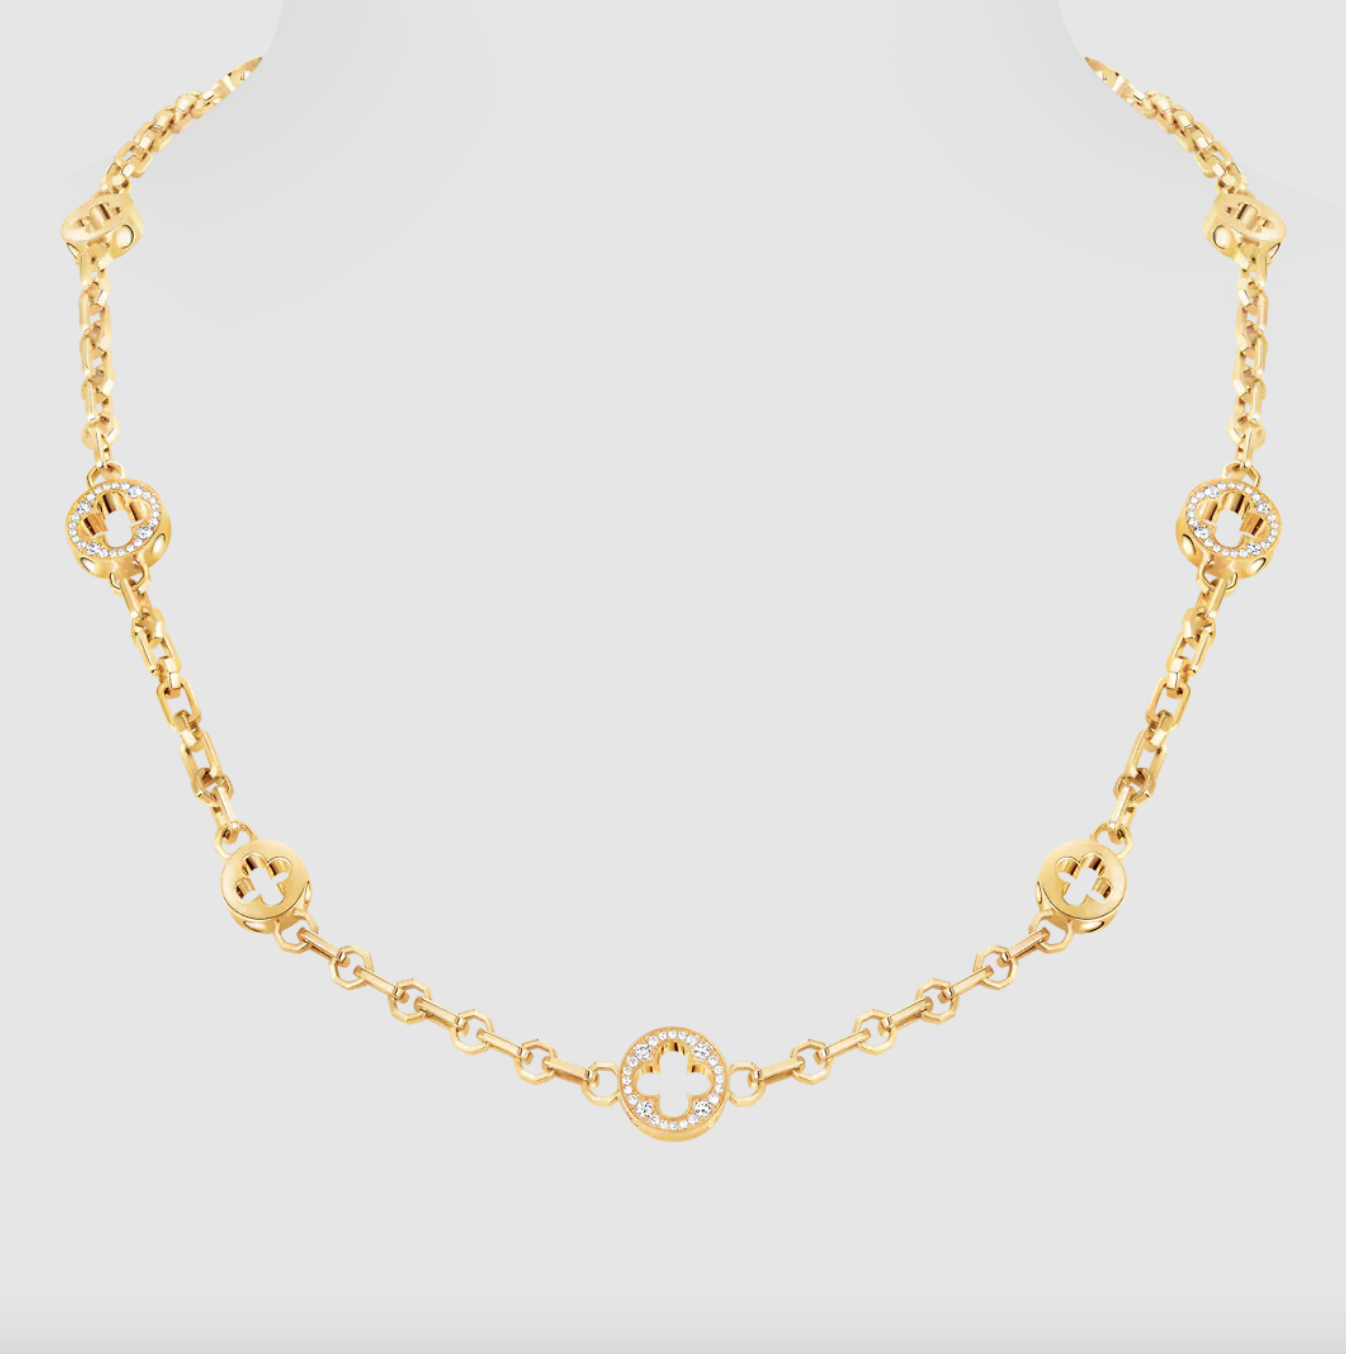 louisvuitton #goldenretriever #skincare #jewelry